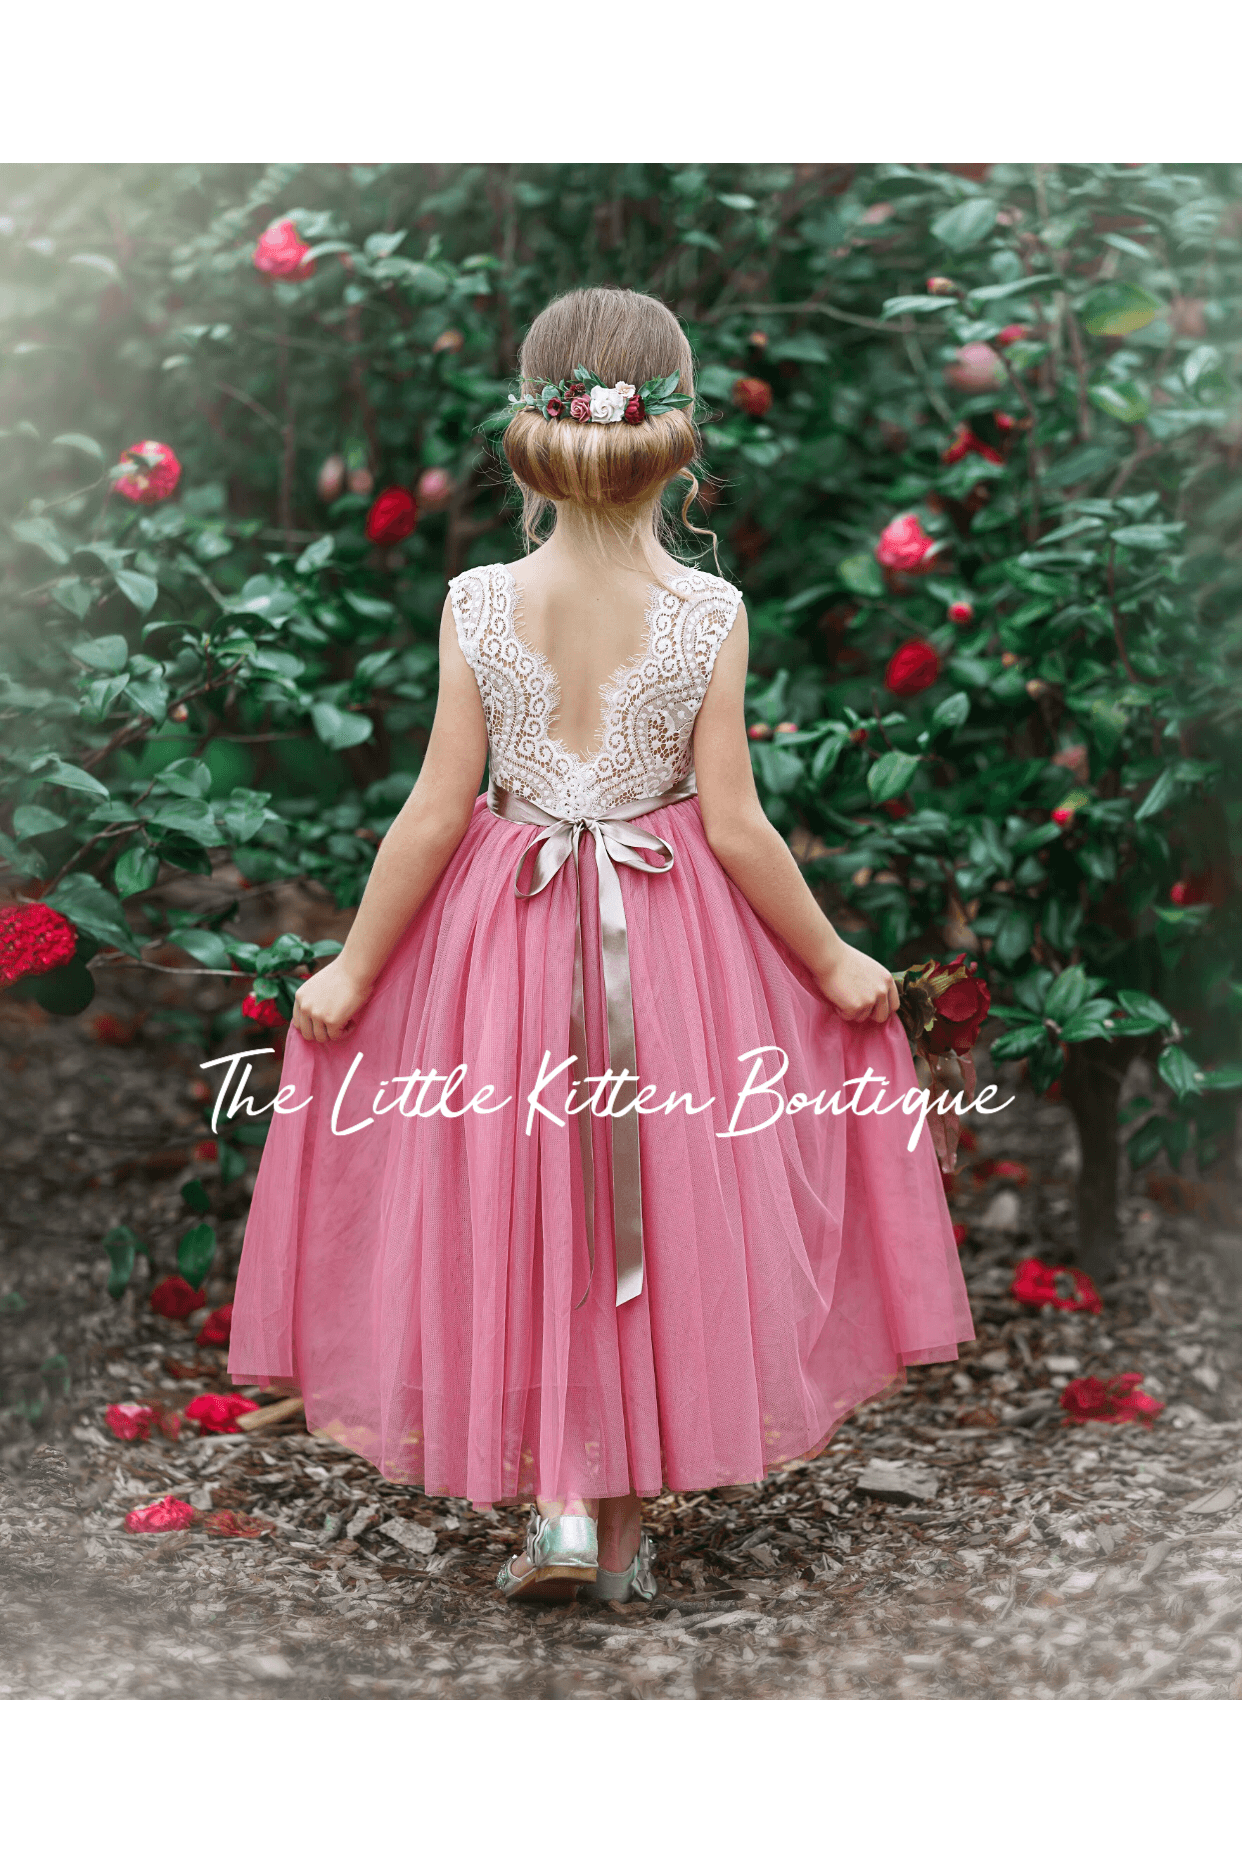 Rustic Lace Boho Style Flower Girl Dress - The Little Kitten Boutique